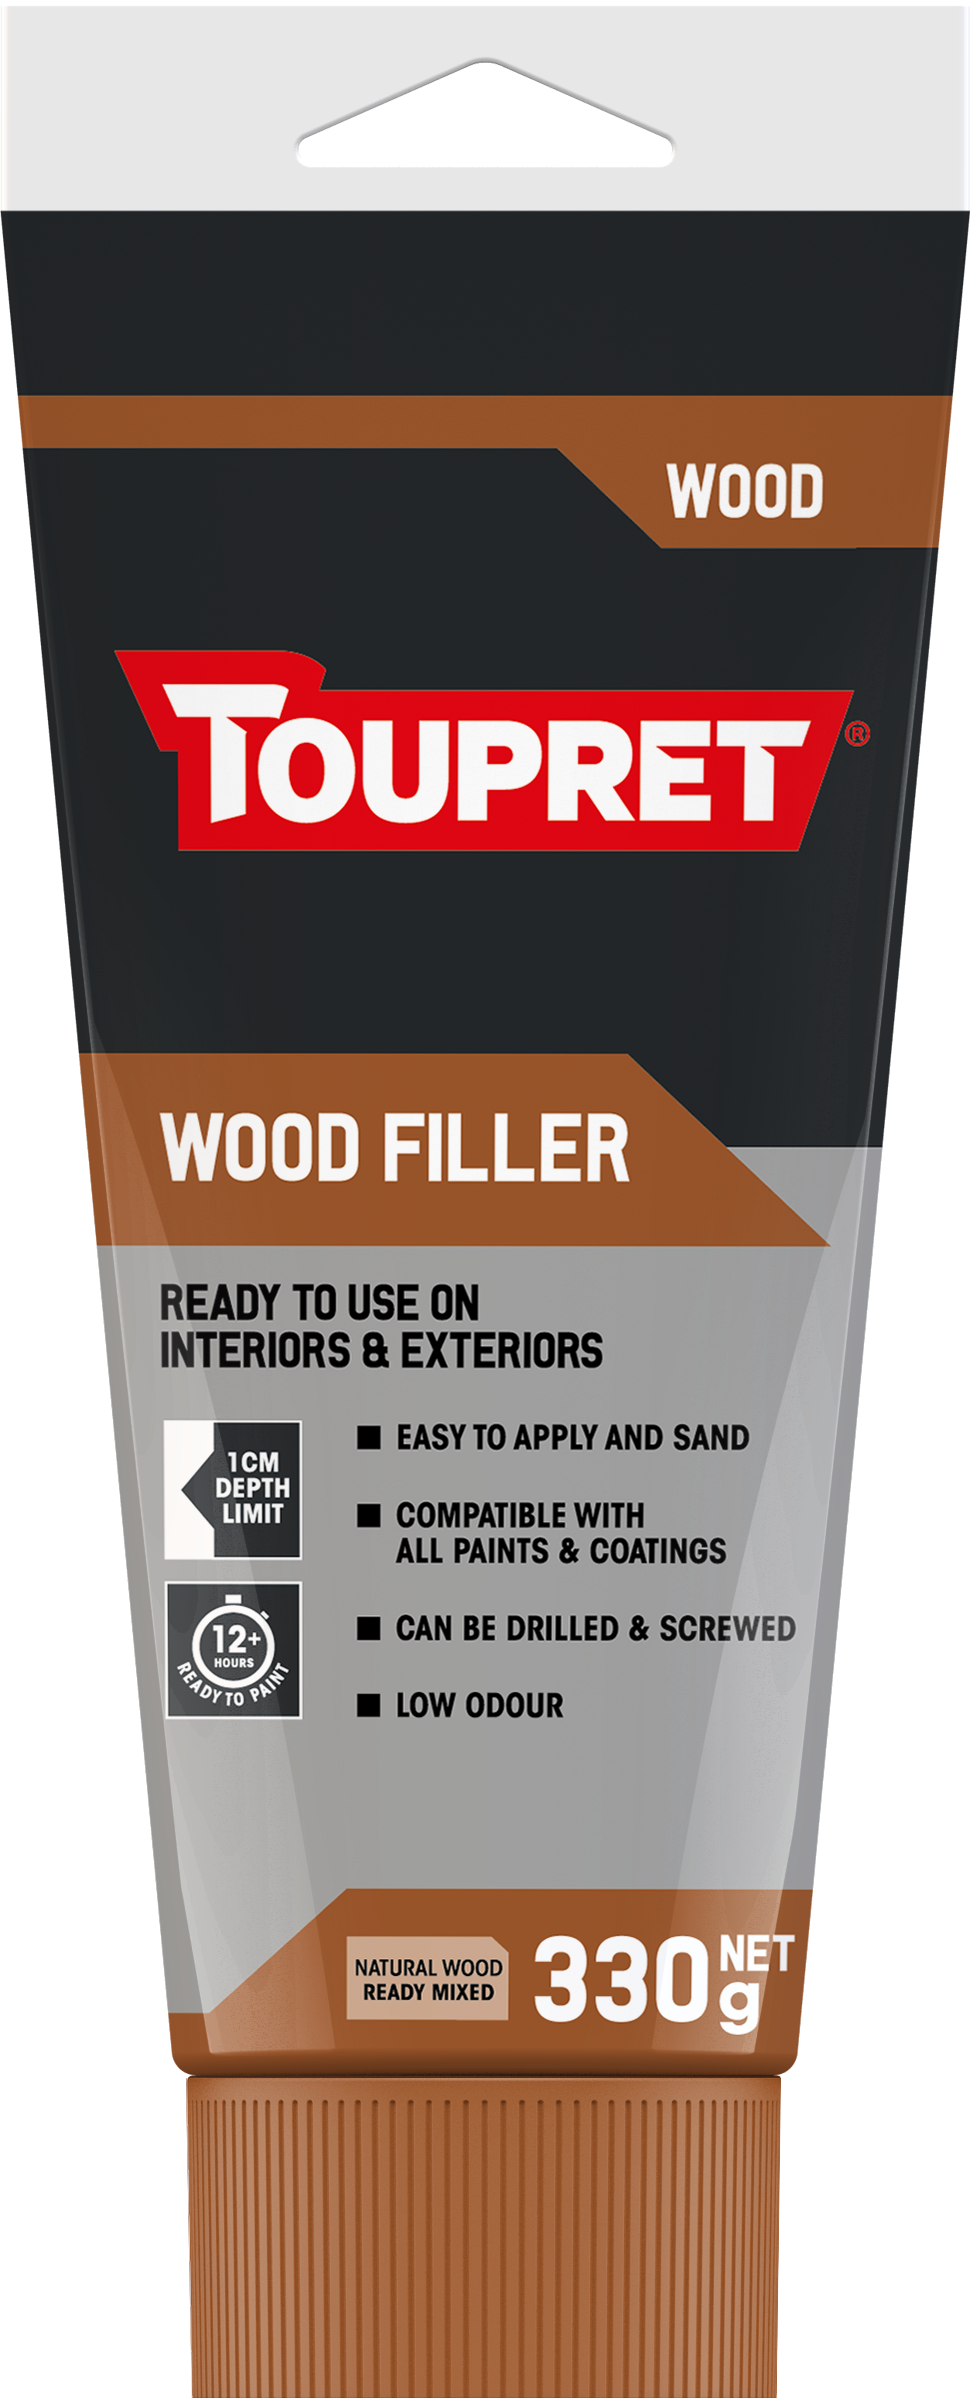 Toupret Wood Filler (Natural Wood, Ready Mixed, Int/Ext) 330g